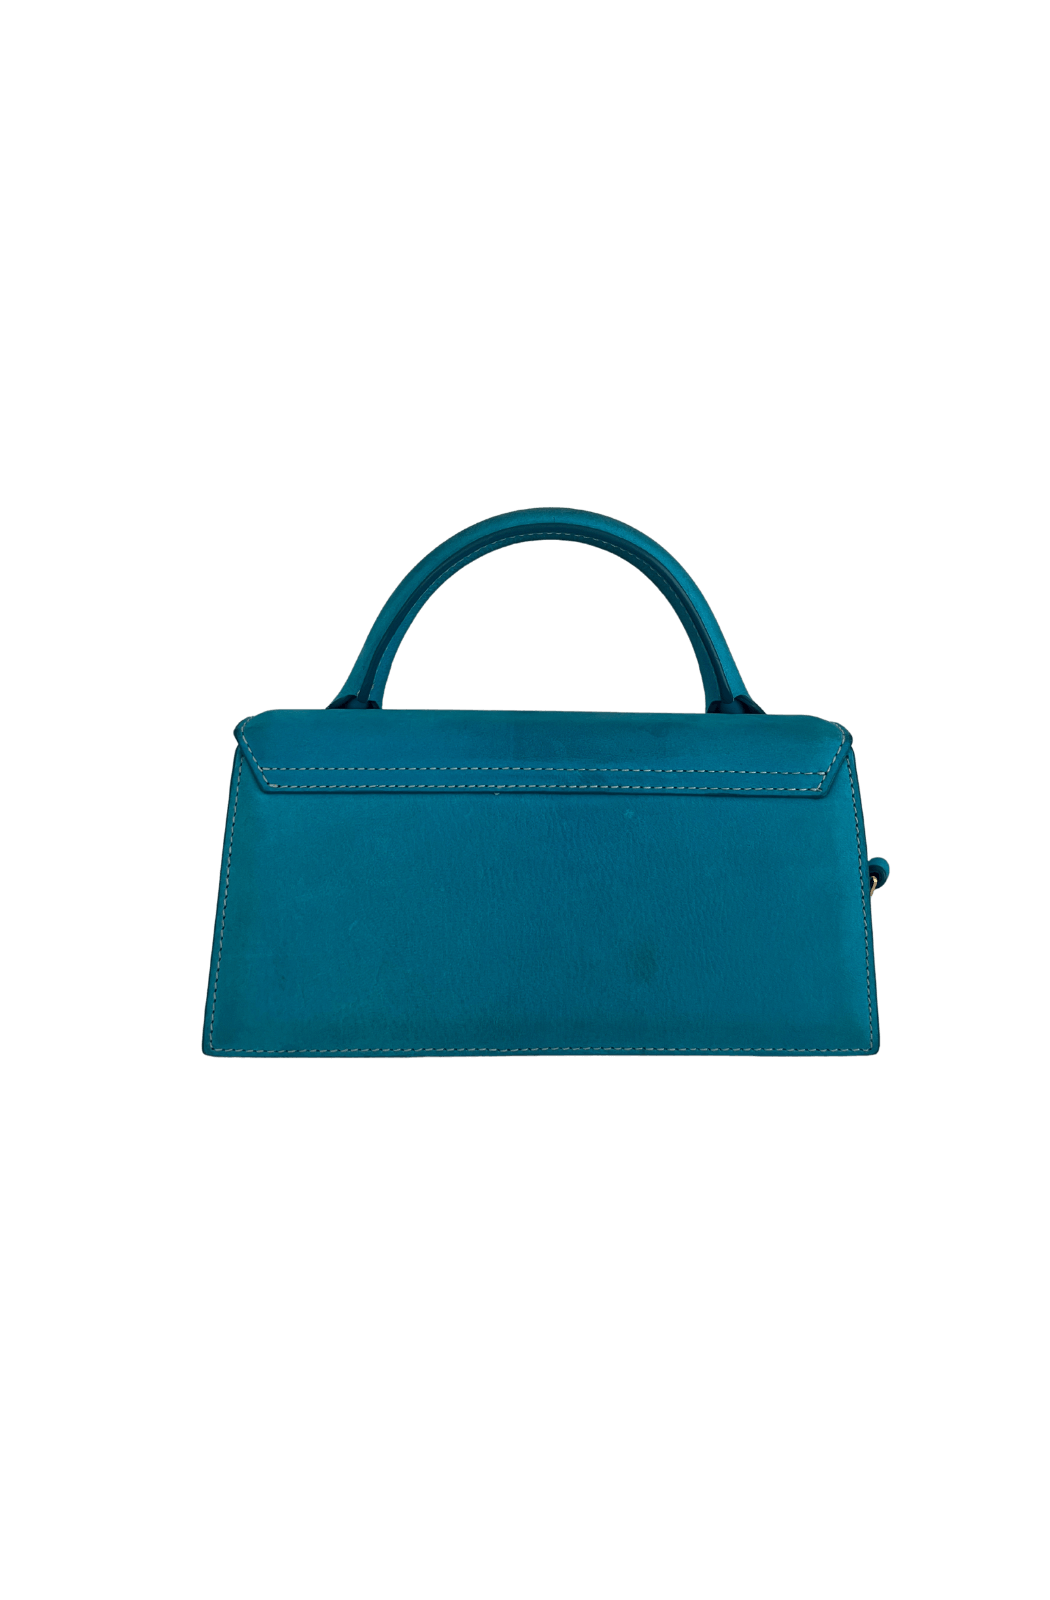 Jacquemus Le Chiquito Long Bag - Turquoise